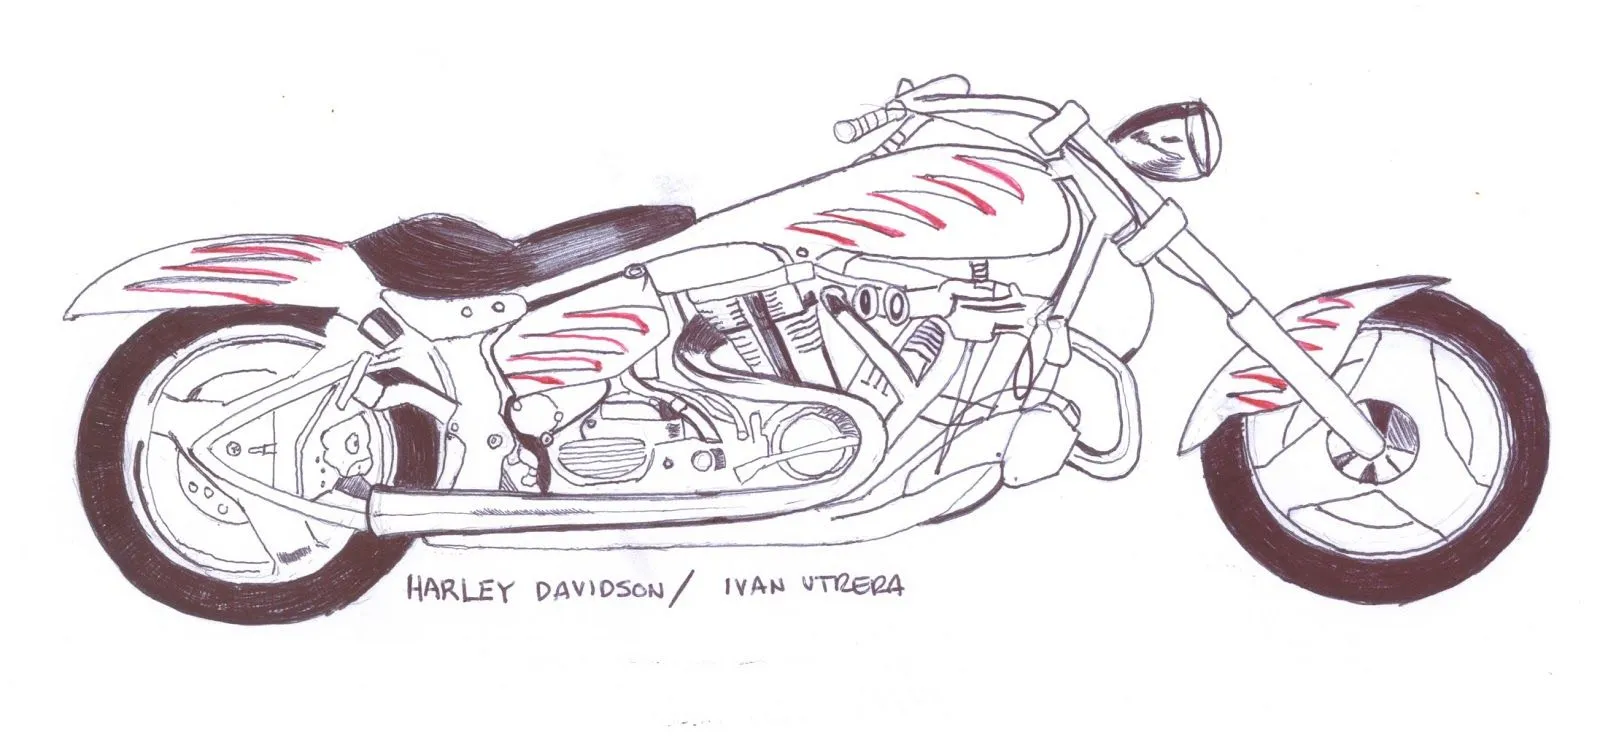 Harley Davidson a lapicero | Dibujo a lápiz, Reciclaje, Tallado en ...